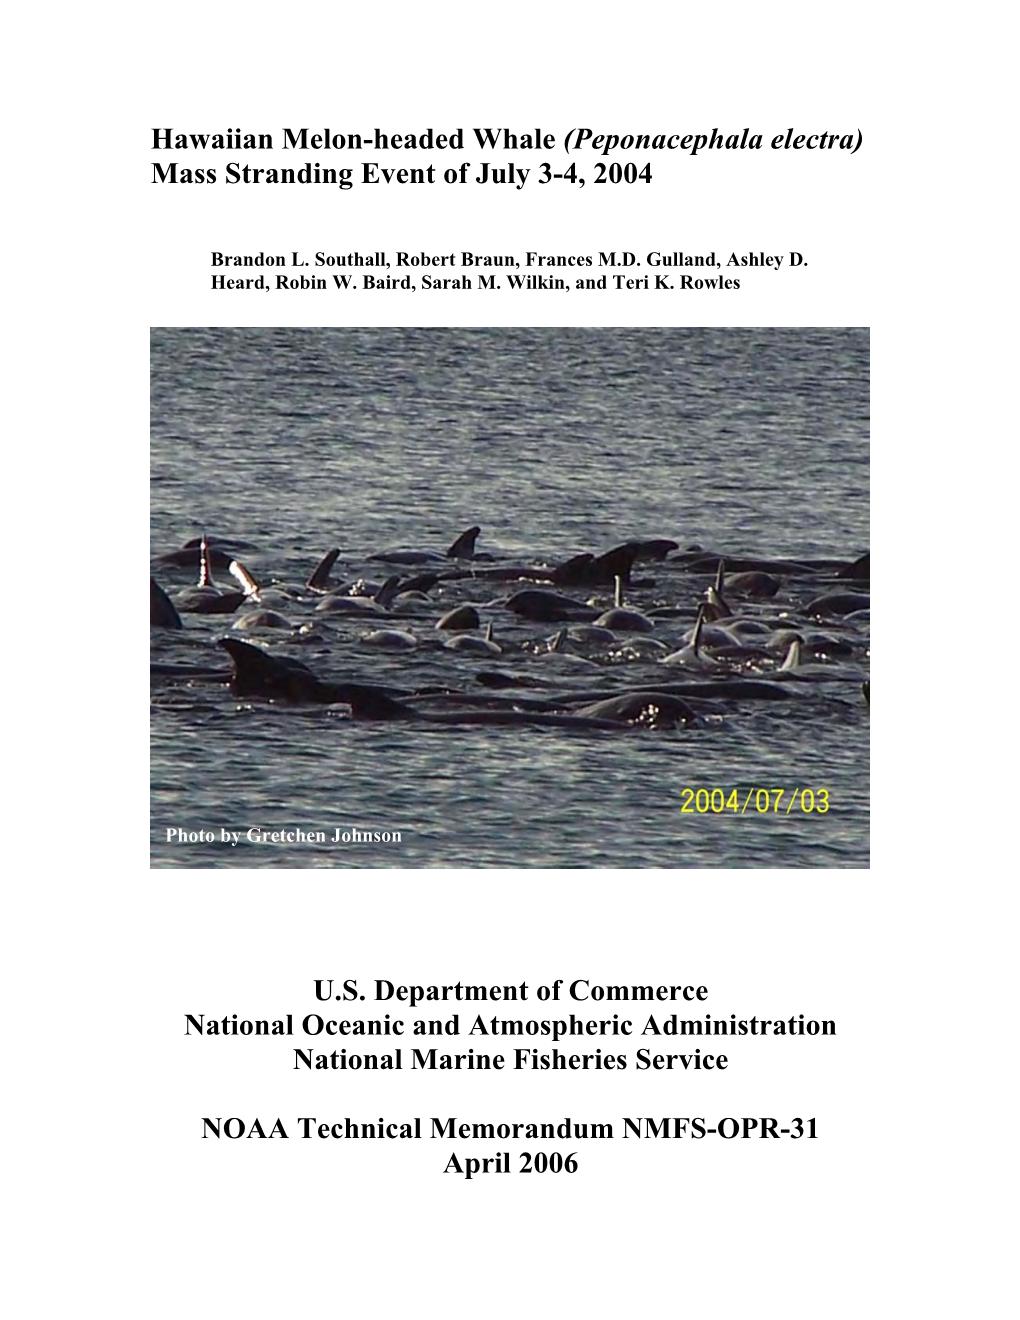 Hawaiian Melon-Headed Whale (Peponacephala Electra) Mass Stranding Event of July 3-4, 2004